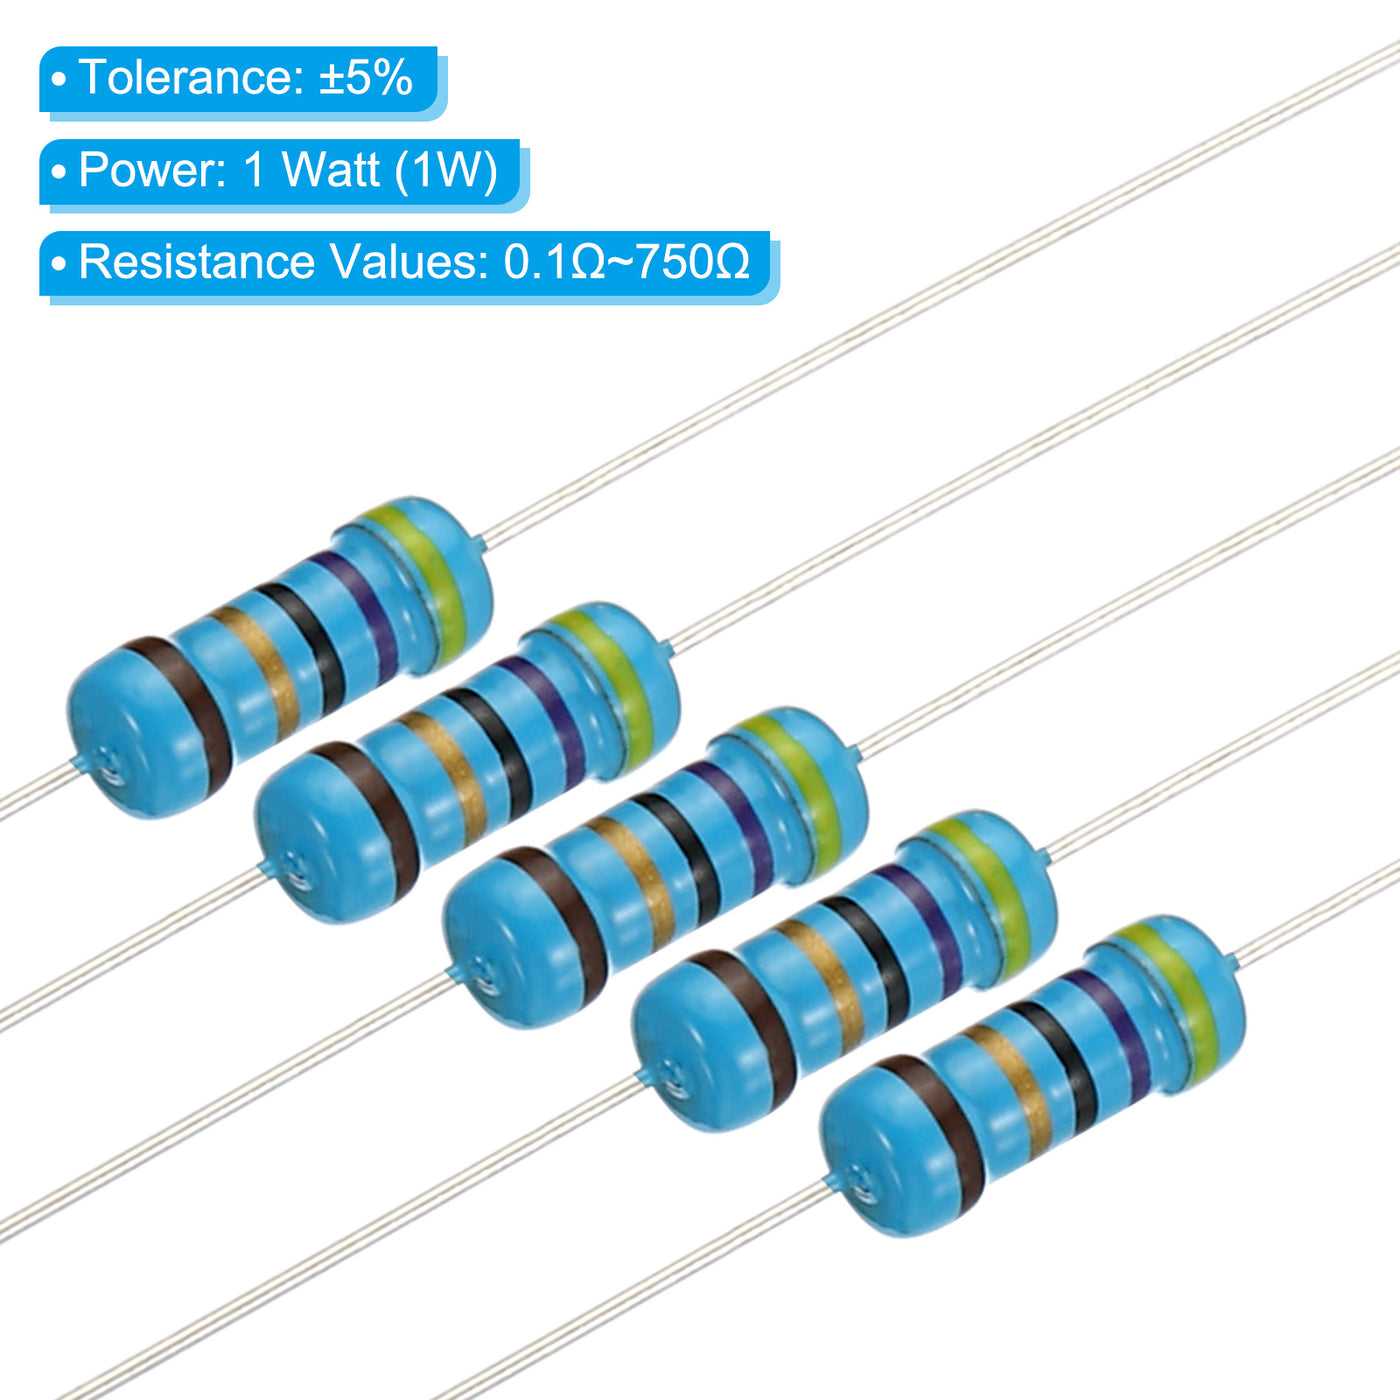 Harfington 150pcs Metal Film Resistor Assortment Kit 0.1 Ohm - 750 Ohm, 30 Values 1W 5% Tolerance for DIY Projects Experiments